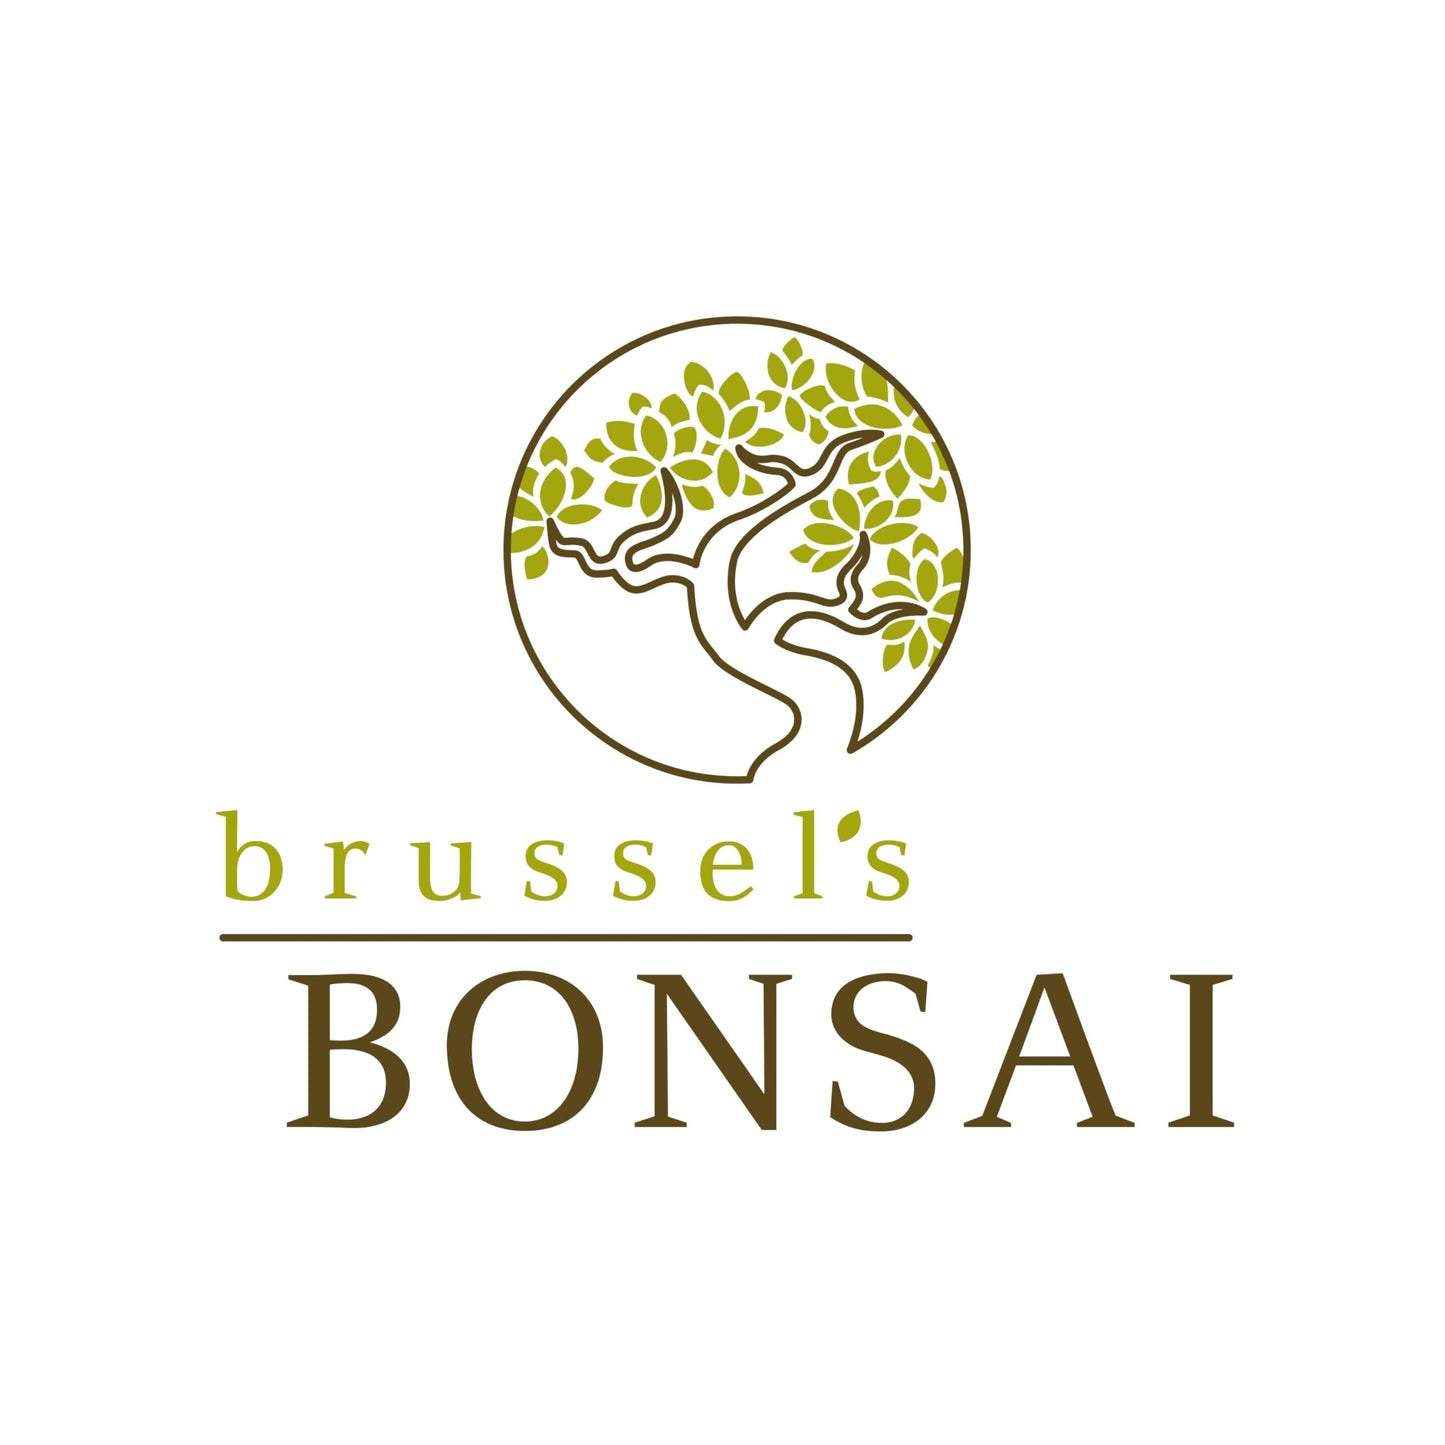 Brussel's Bonsai Live Satsuki Azalea Bonsai, Outdoor, Live Flowering Bonsai Tree - Small, 5 Years Old, 5 to 8 inches Tall - Ceramic Bonsai Pot